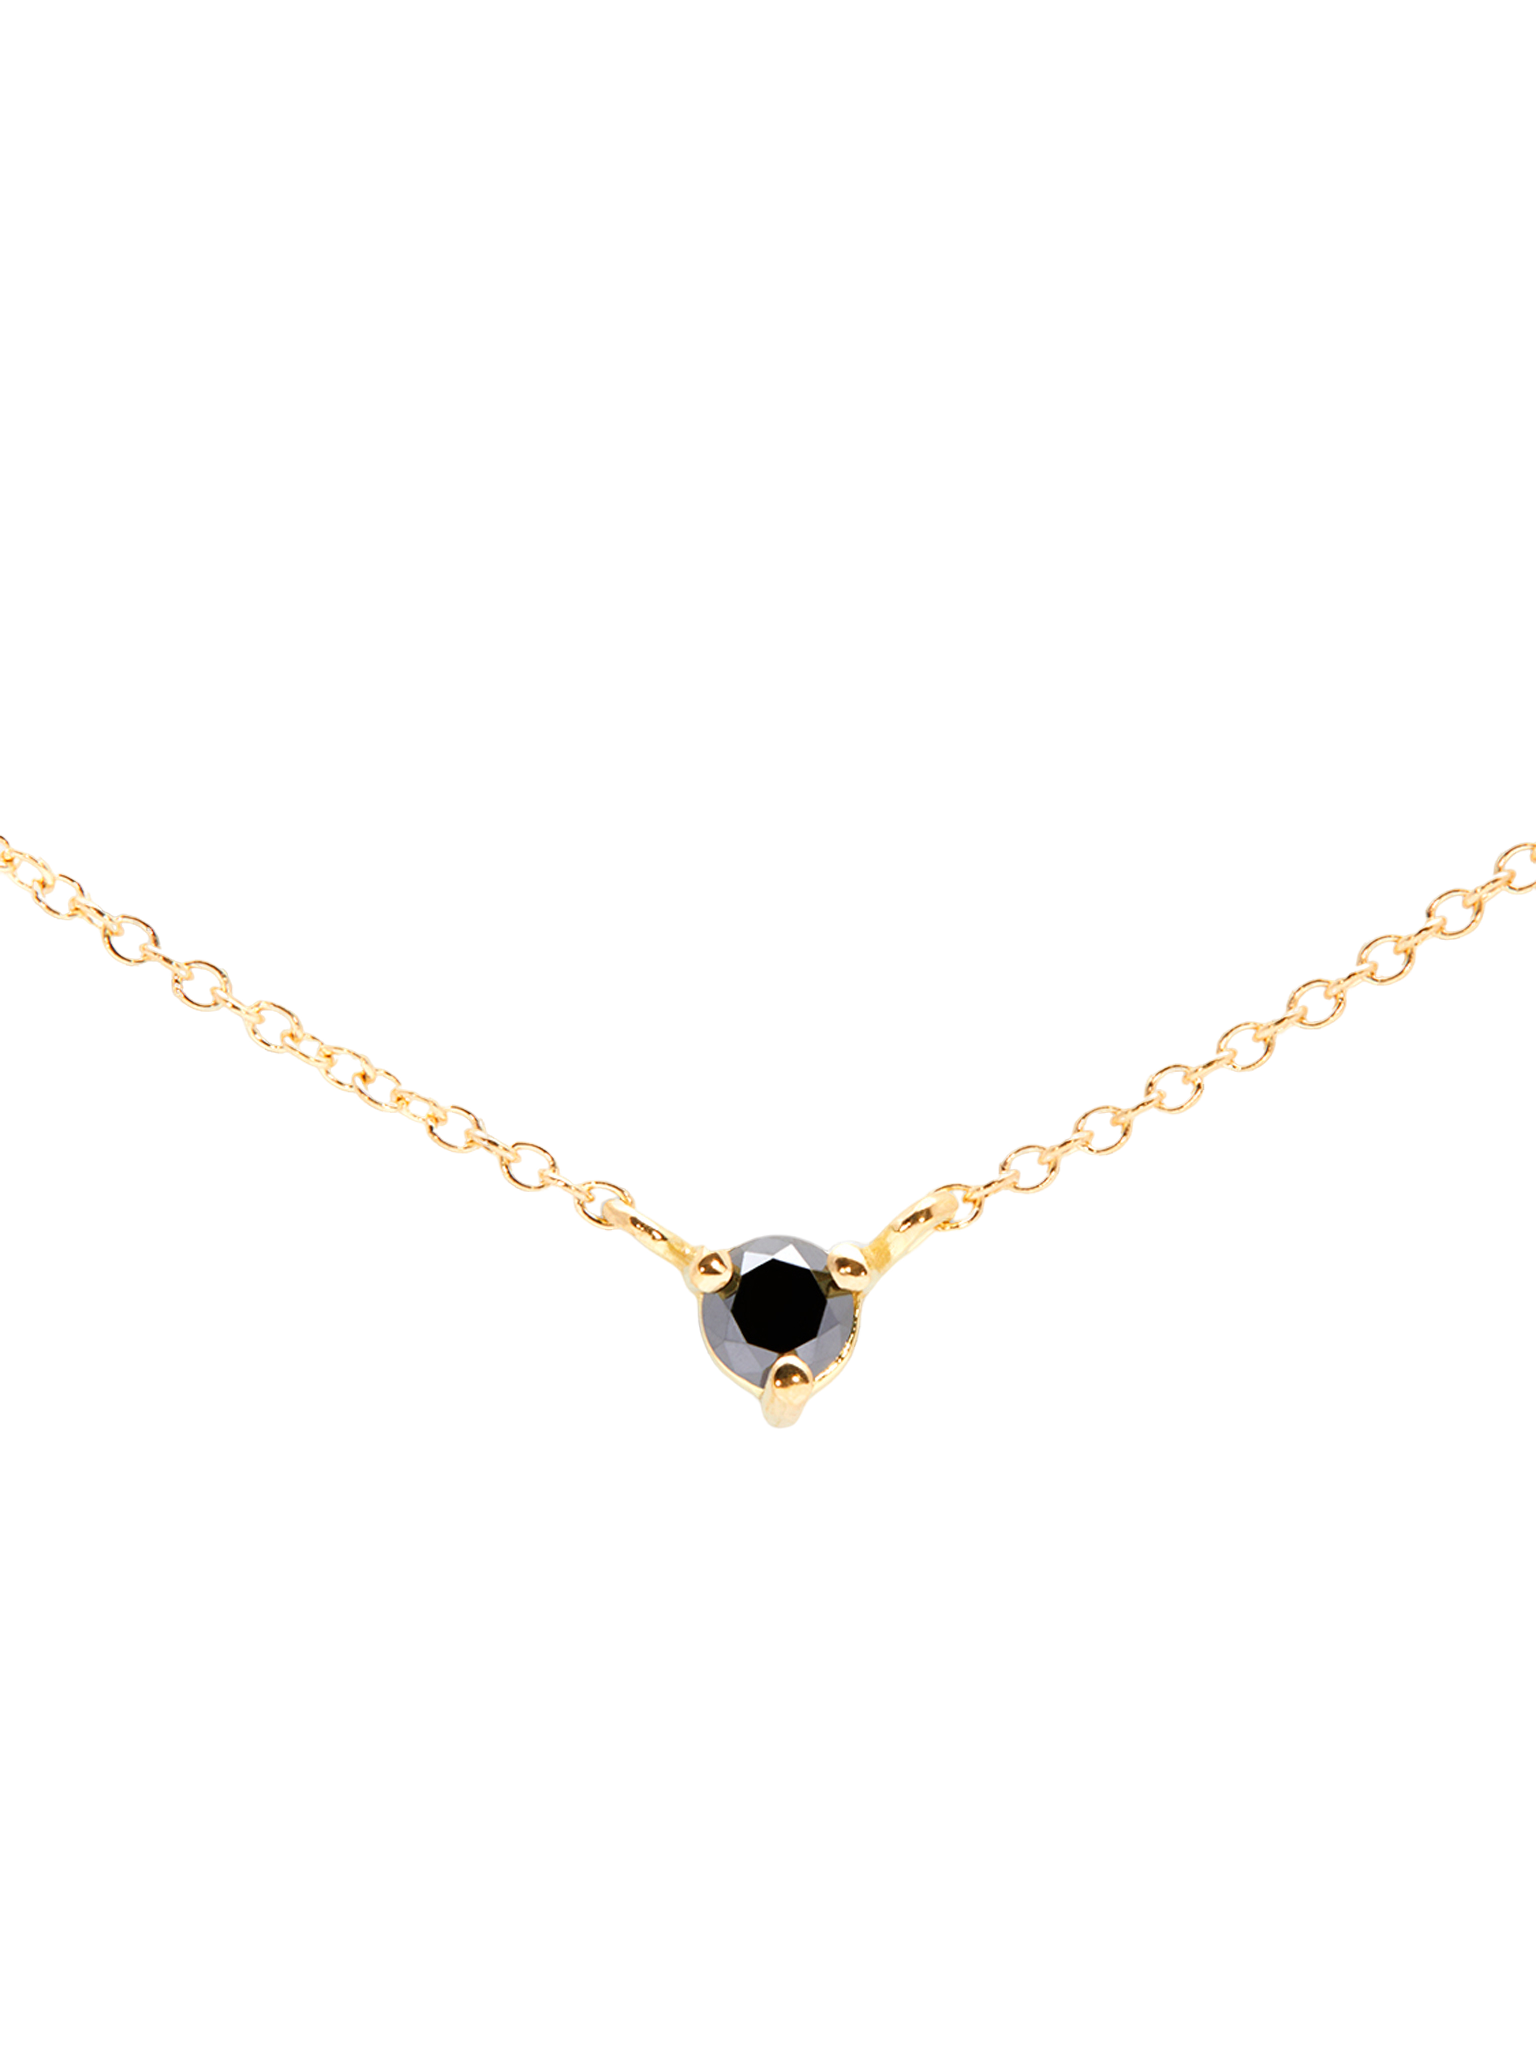 Birthstone black diamond necklace